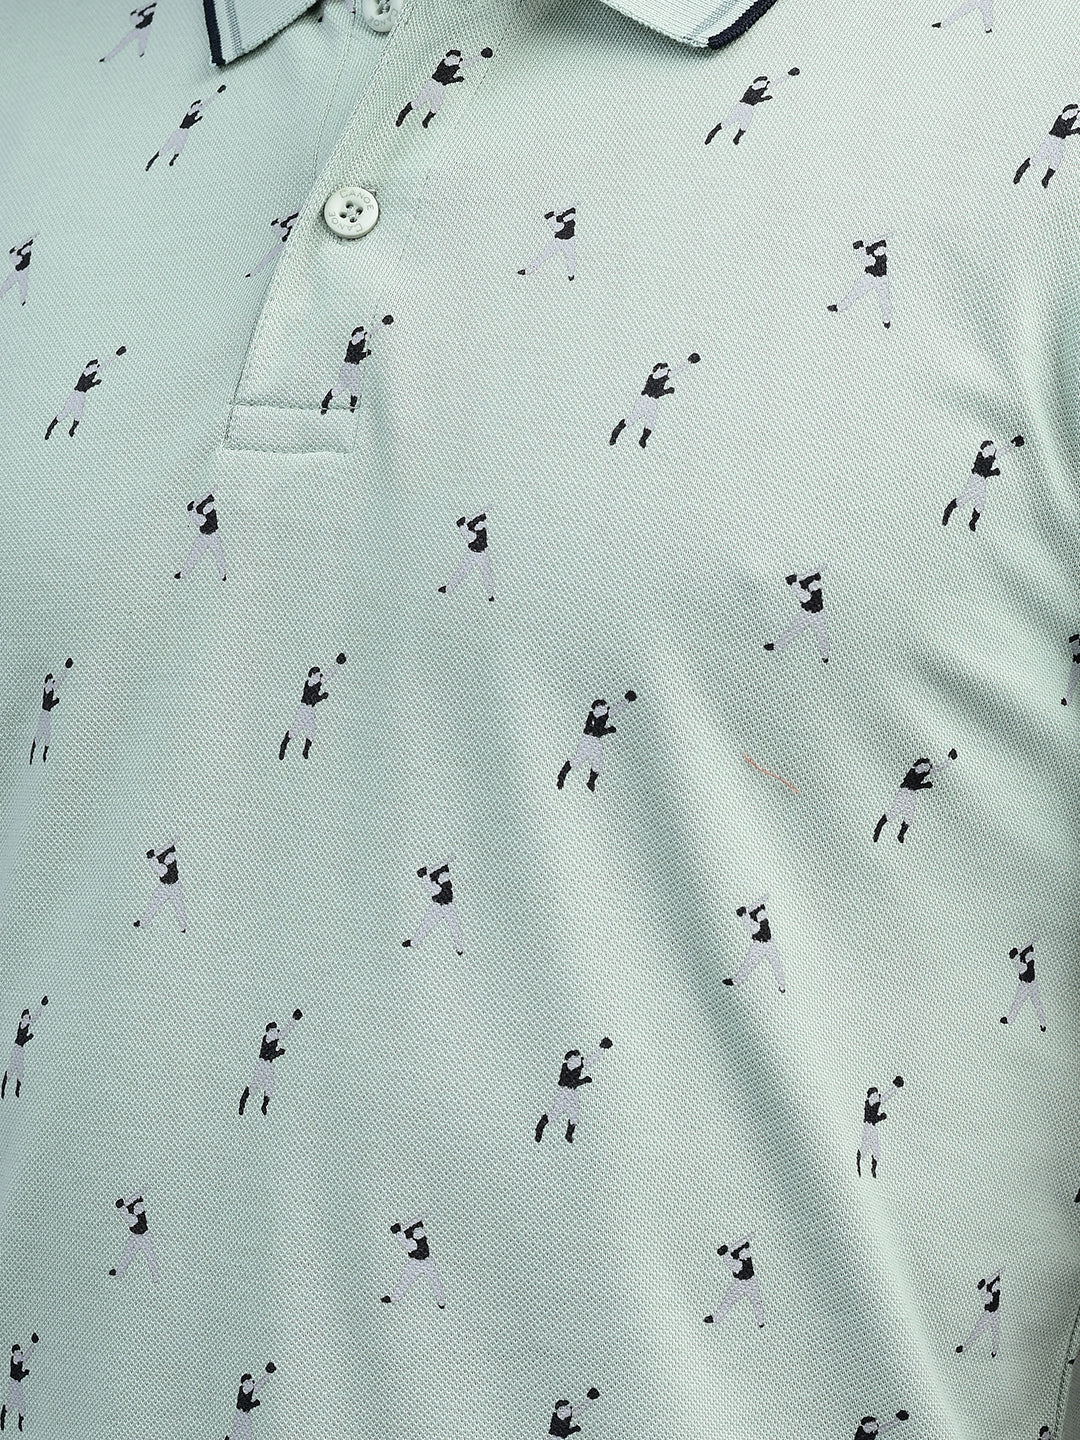 Canoe Men Short Sleeve Polo Neck Printed Pattern T-Shirt